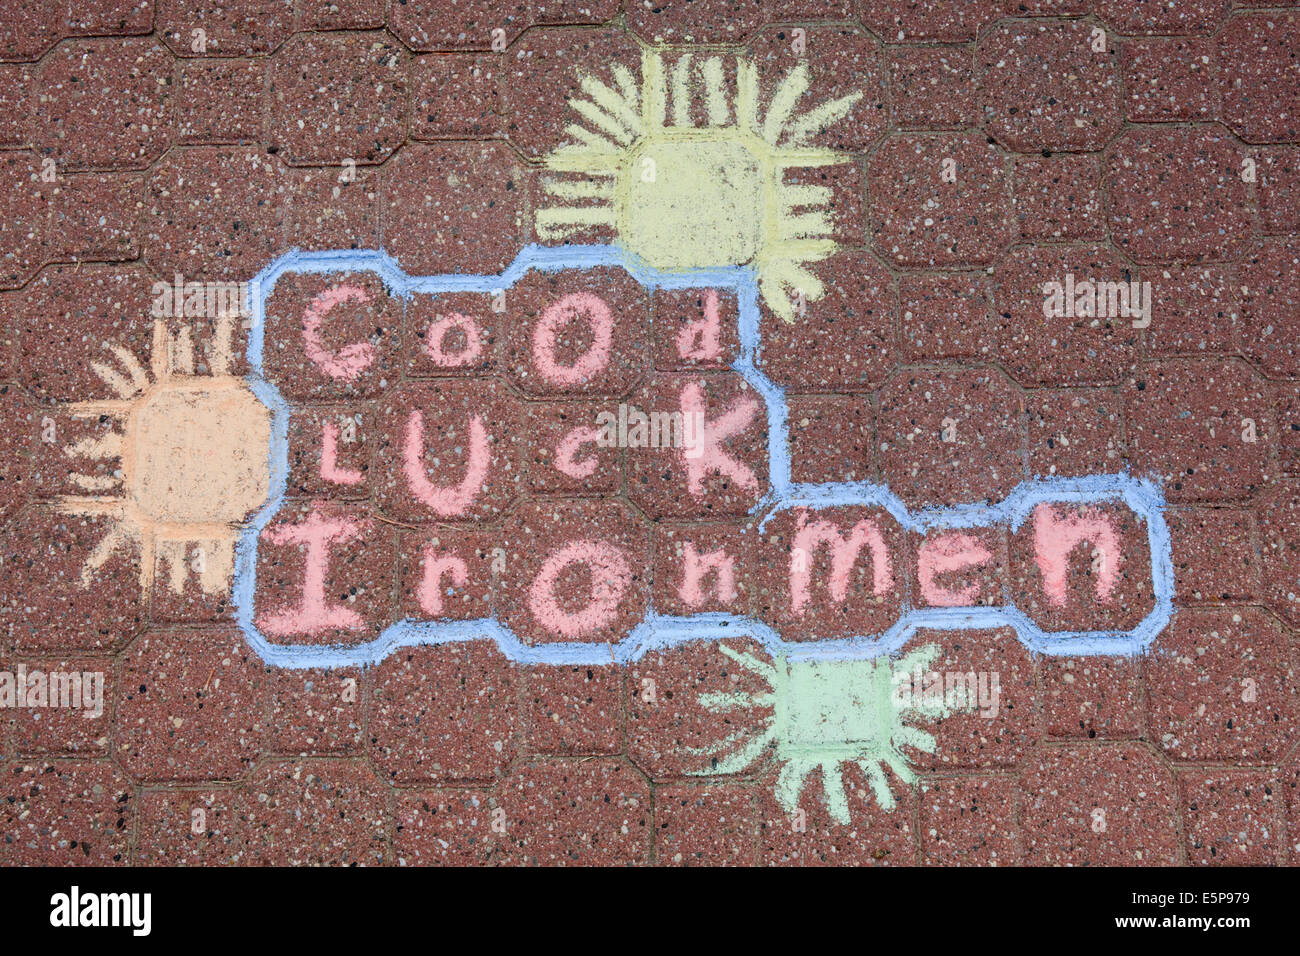 Chalk writing in a sidewalk to wish triathletes good luck at the 2014 Lake Placid Ironman Triathlon. Stock Photo